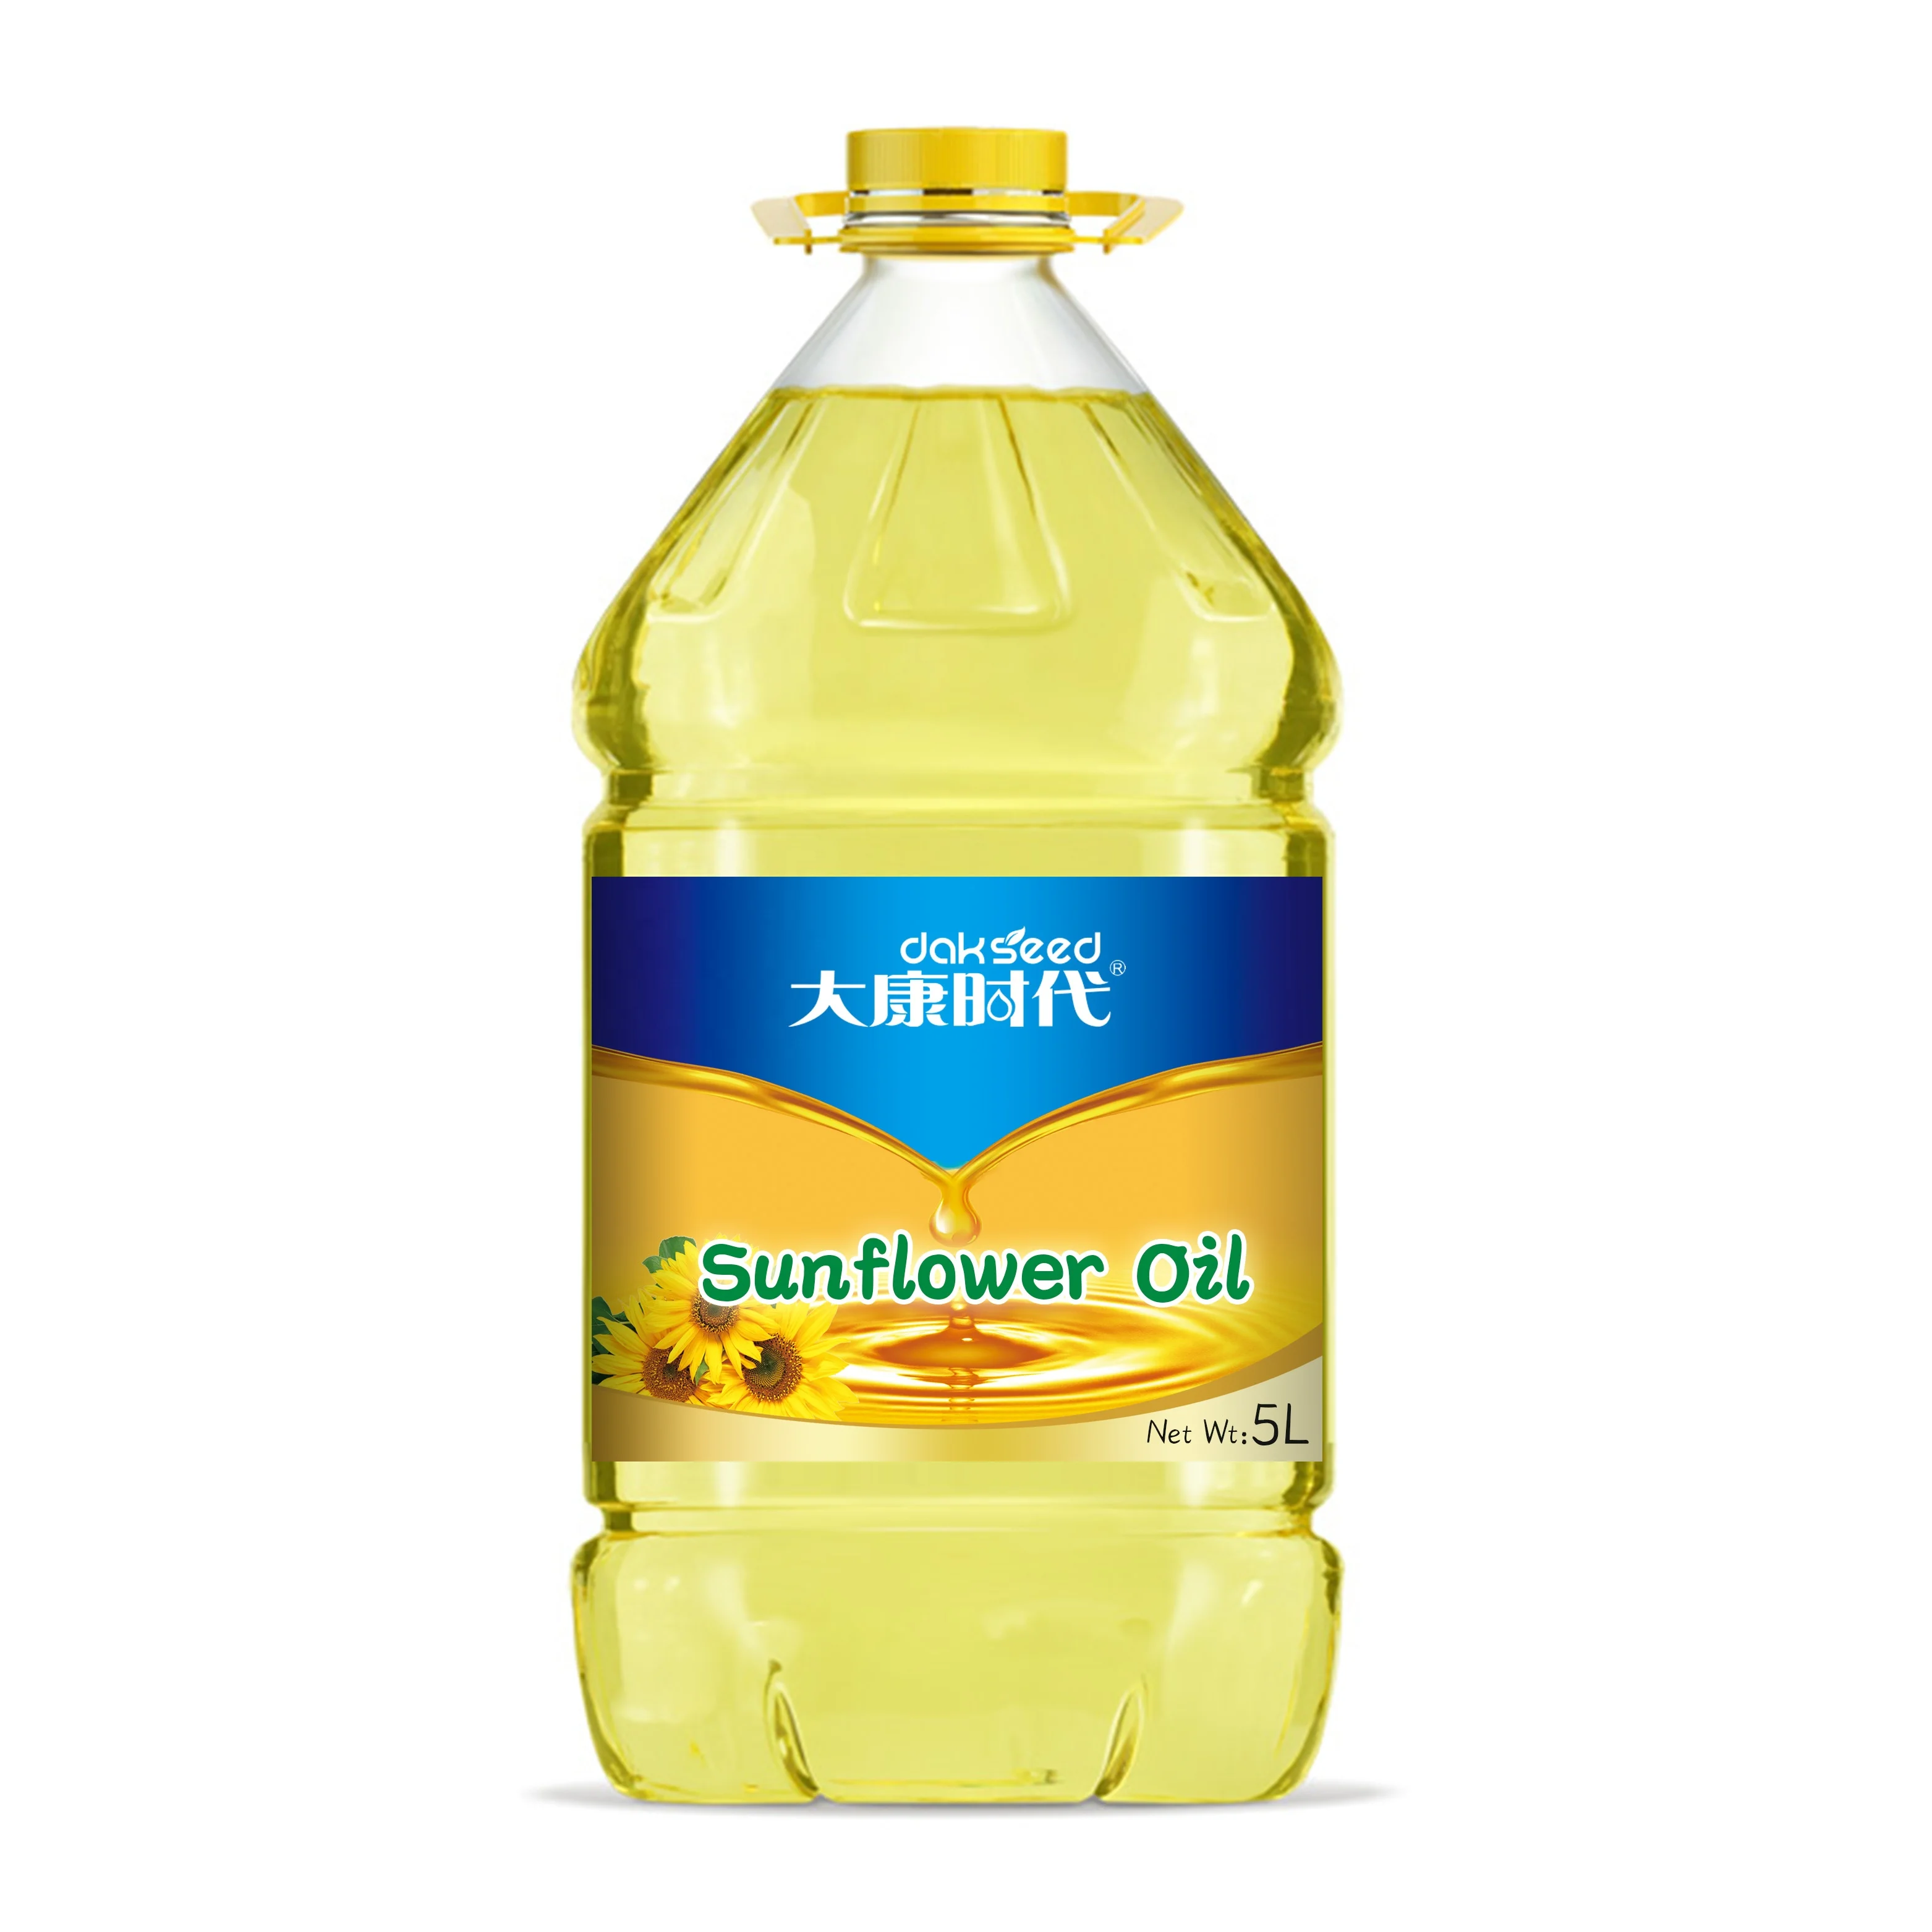 Sunflower Oil/Edible Cooking Oil/Refined Sunflower Oil! (1600496938375)